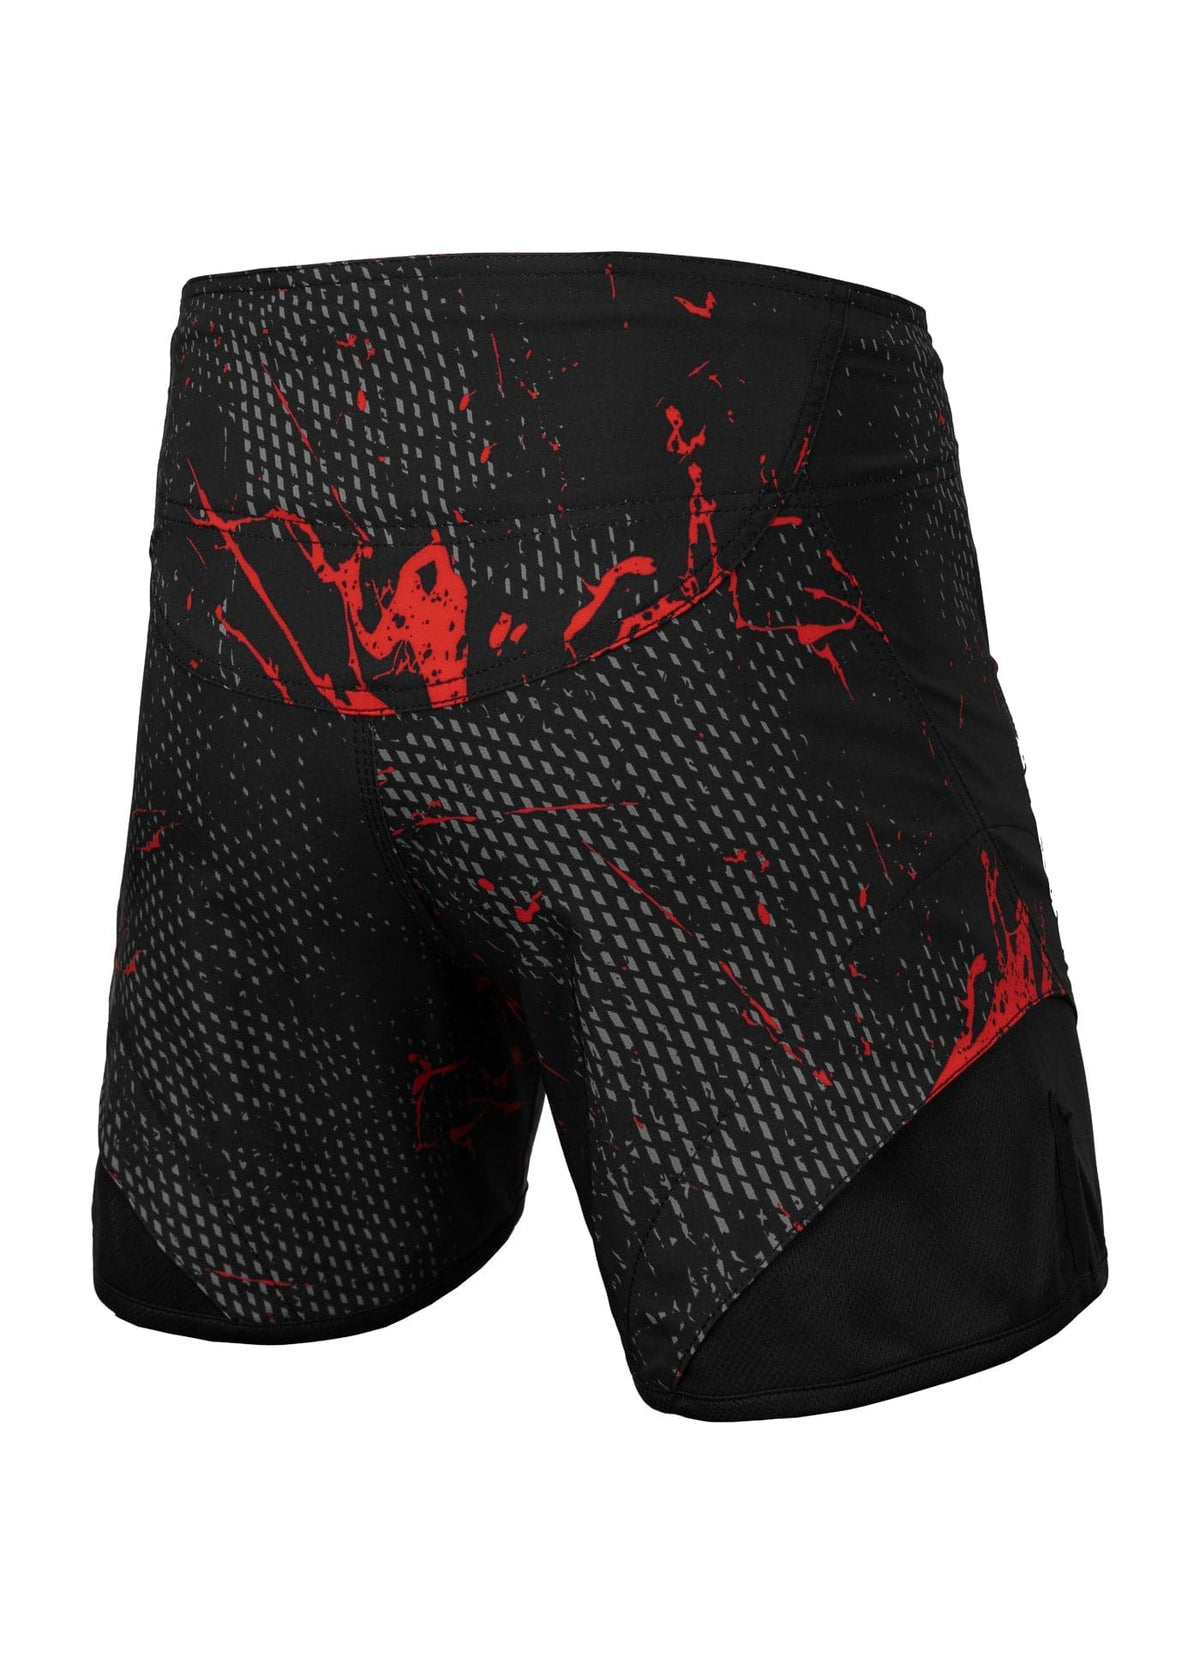 BLOOD DOG 2 Black Grappling Shorts 2 - Pitbull West Coast International Store 